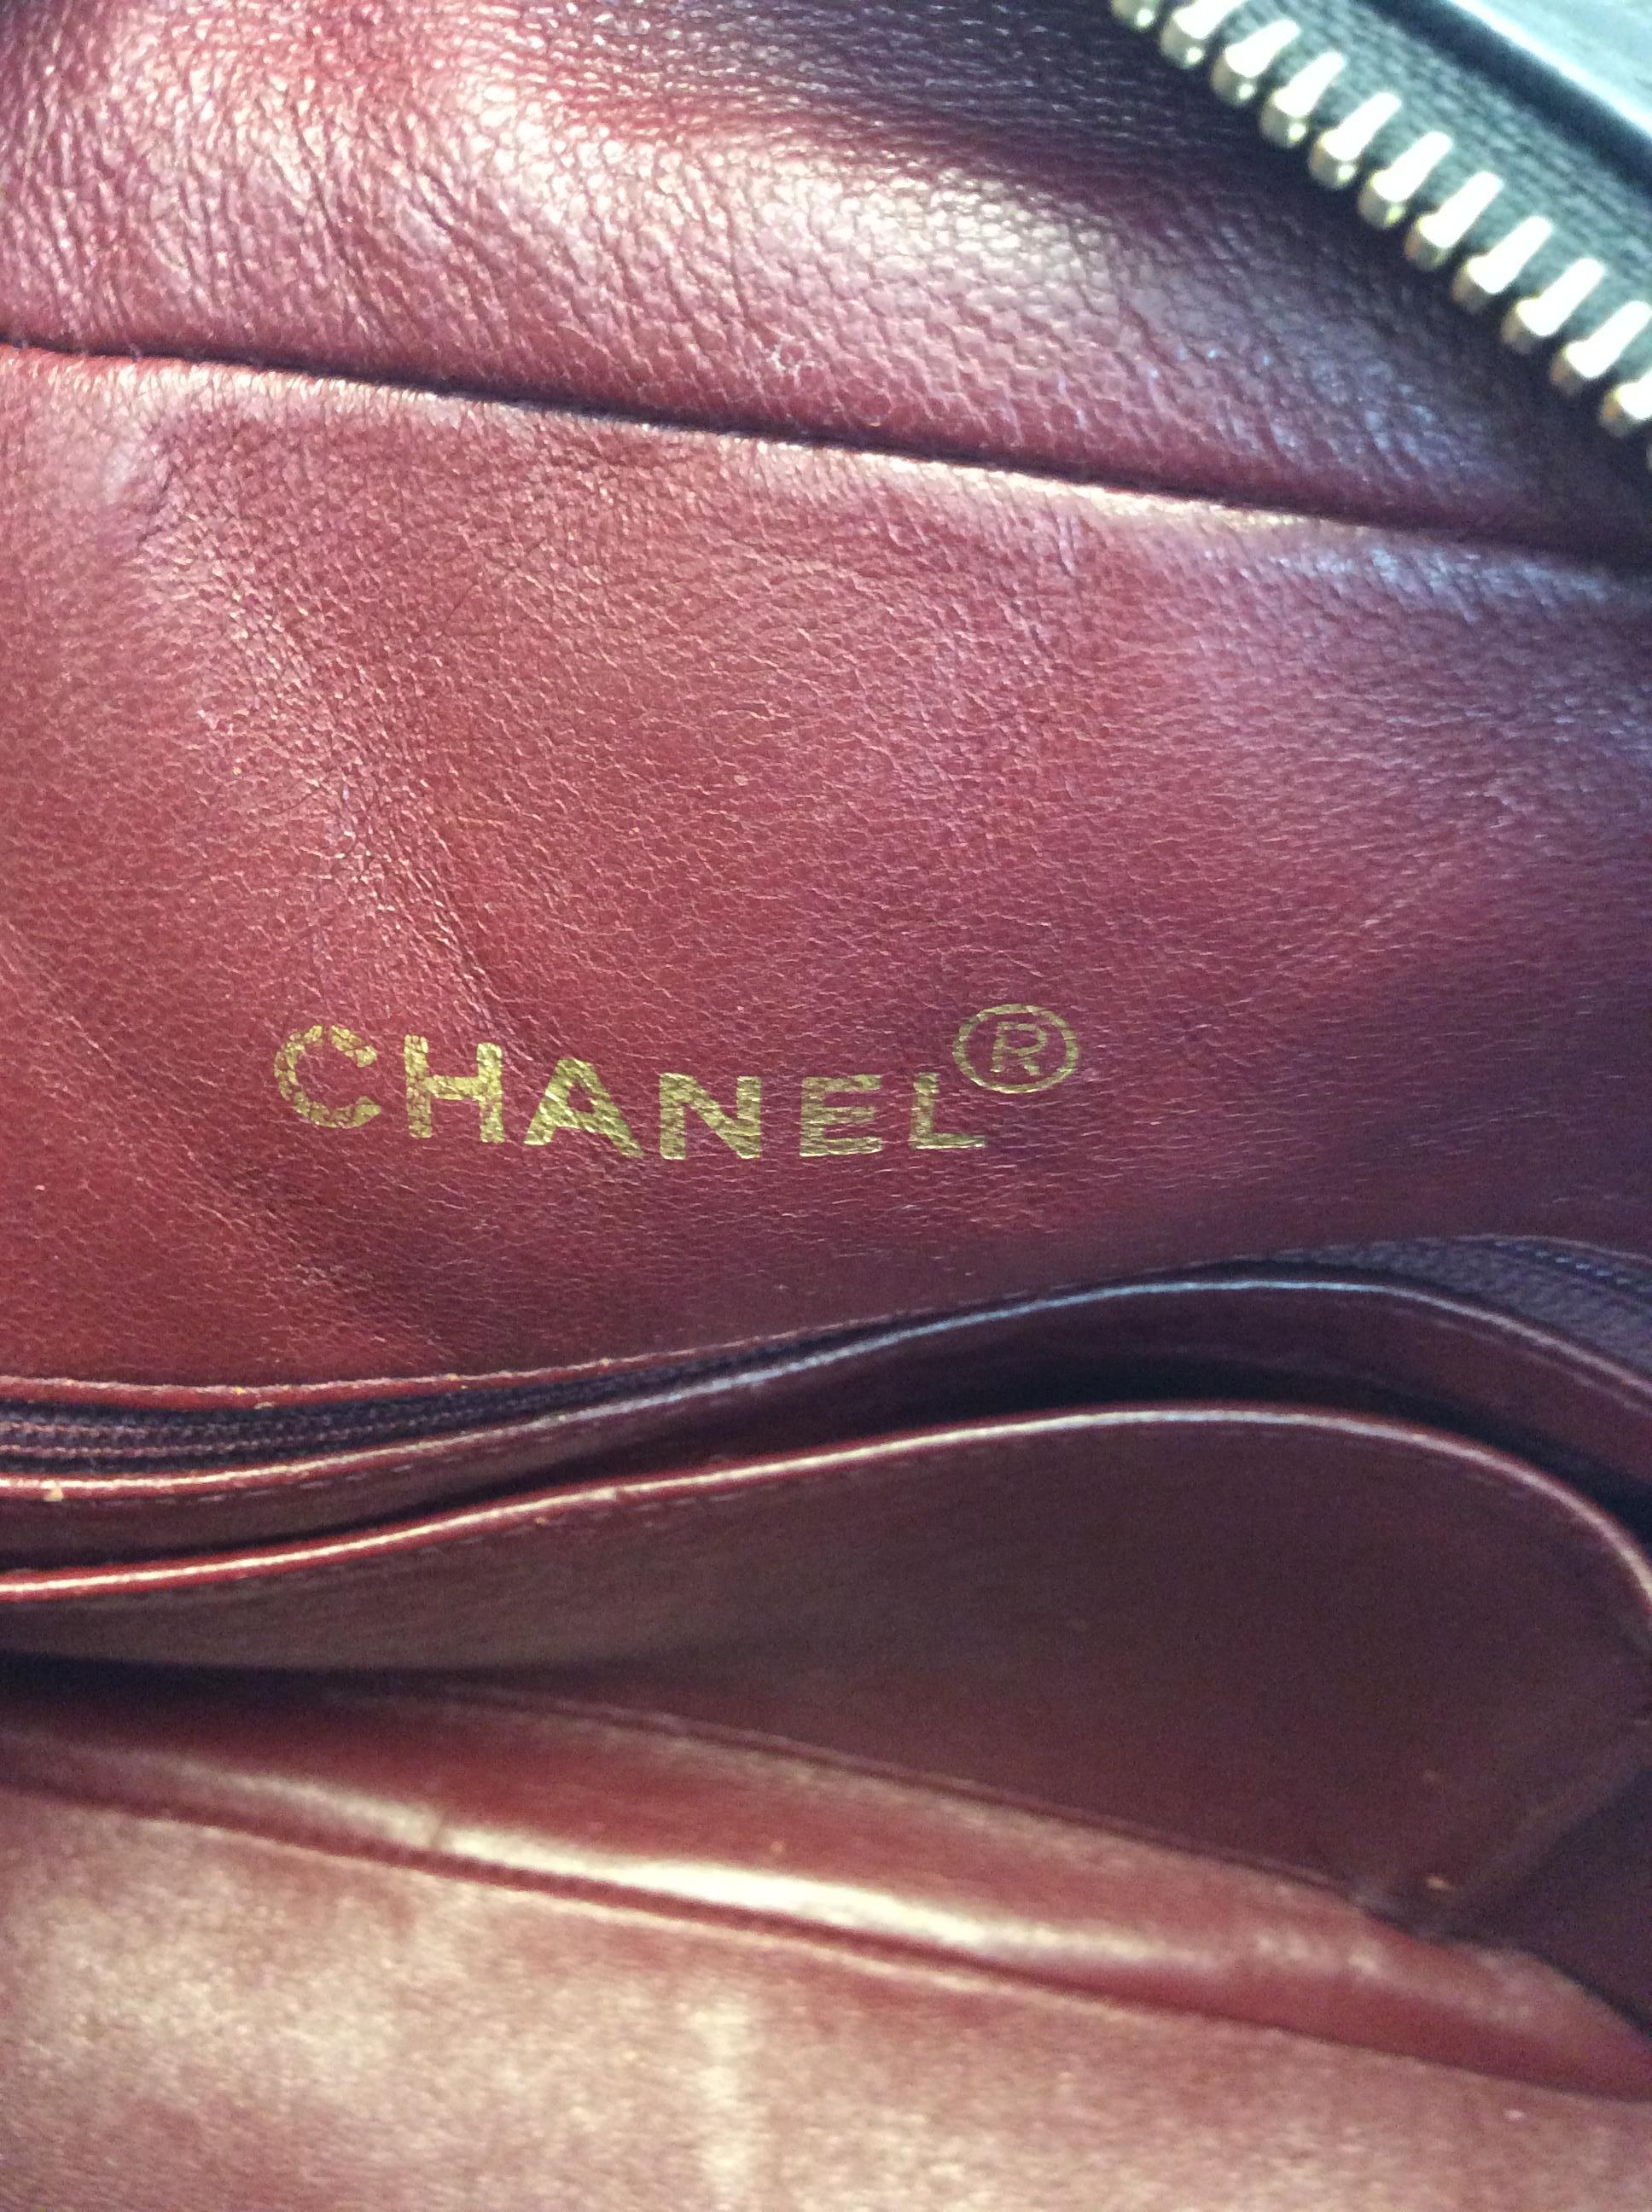 Chanel Black Chevron Quilted Leather Shoulder Bag For Sale 6